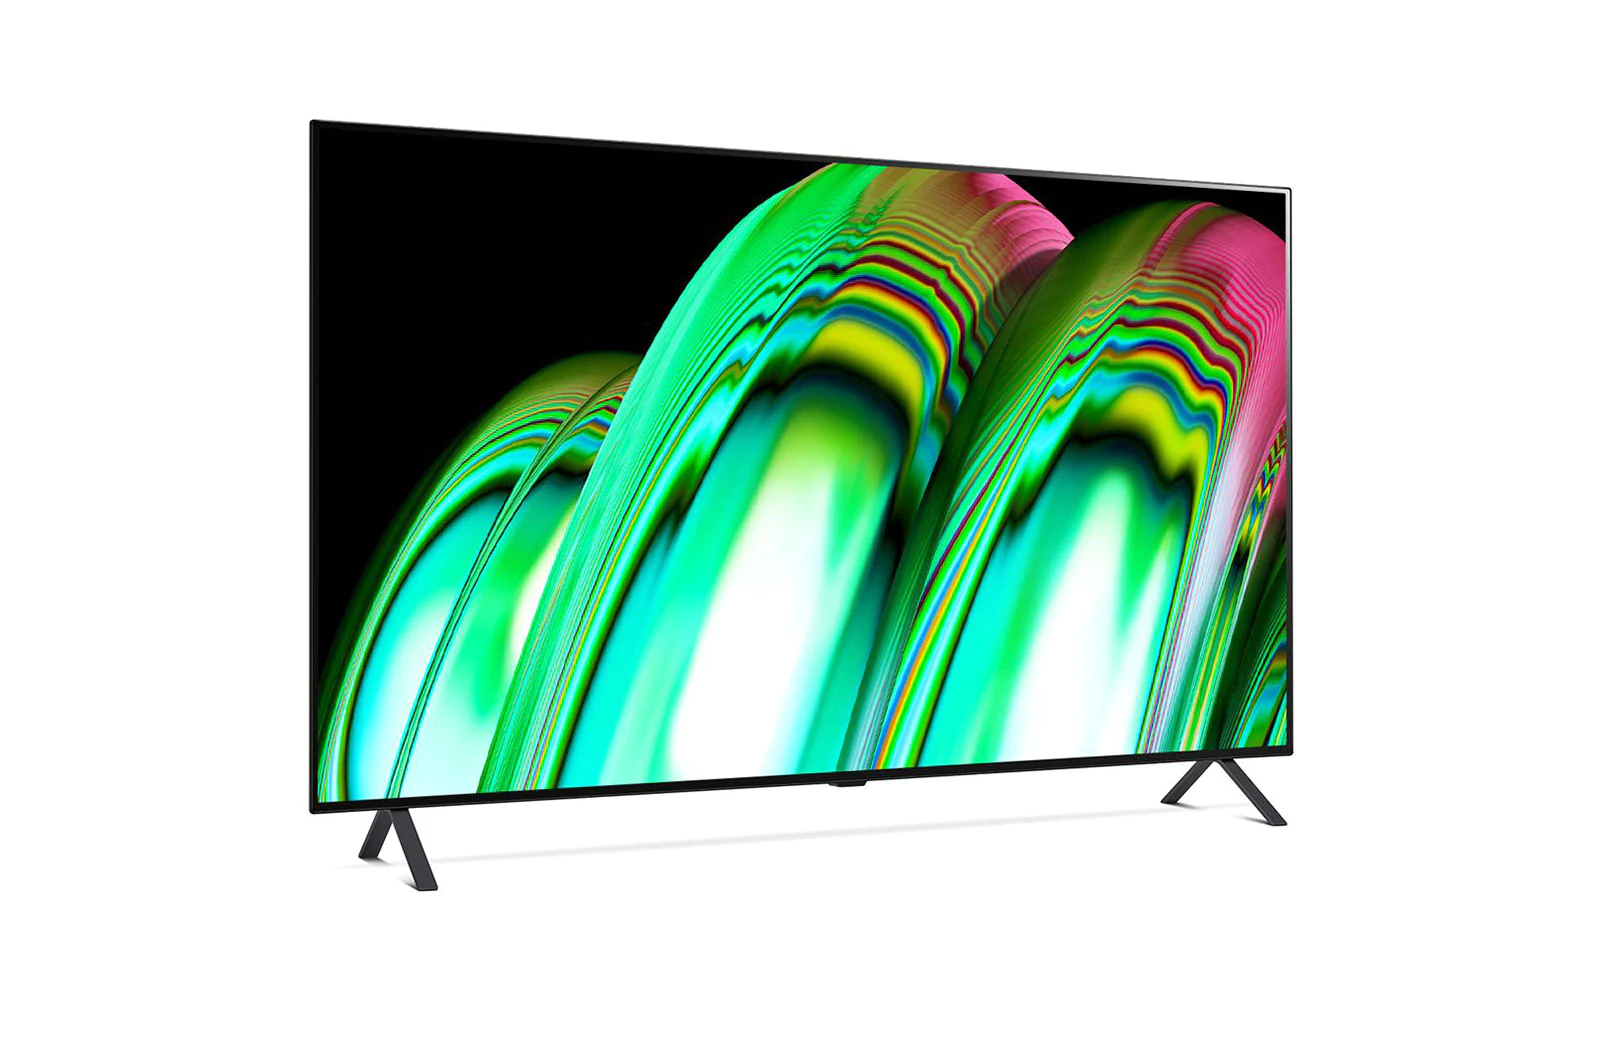 LG OLED TV (55 inch) with 4K Cinema HDR Cinema Screen Design